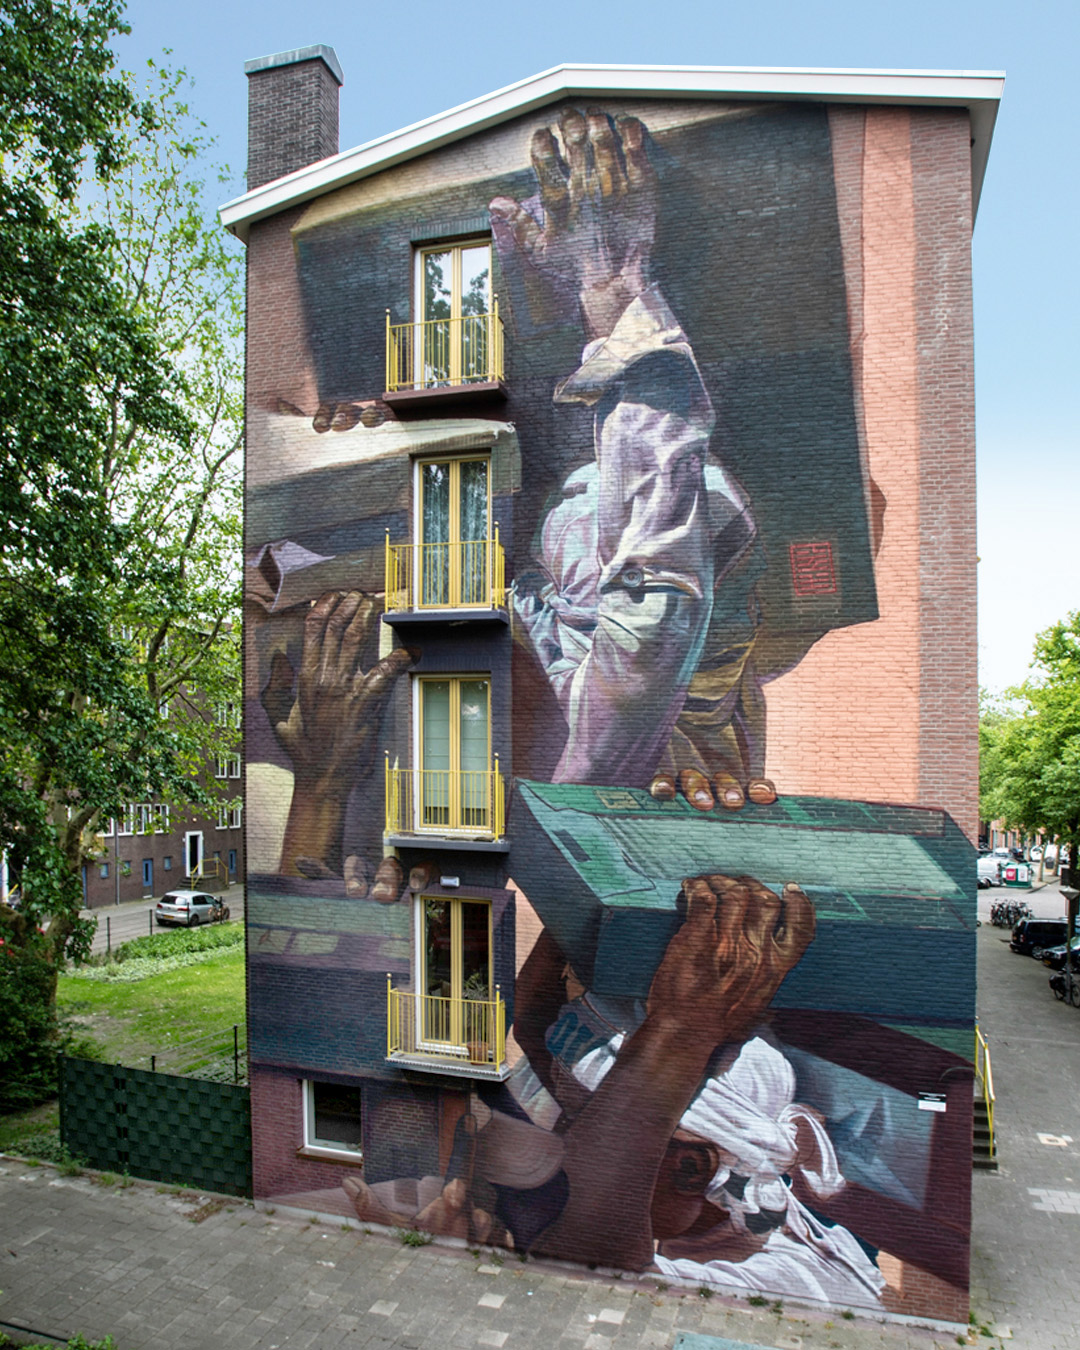 Case Maclaim for "If Walls Could Speak" festival by Amsterdam Street Art Photo Tim van Vliet